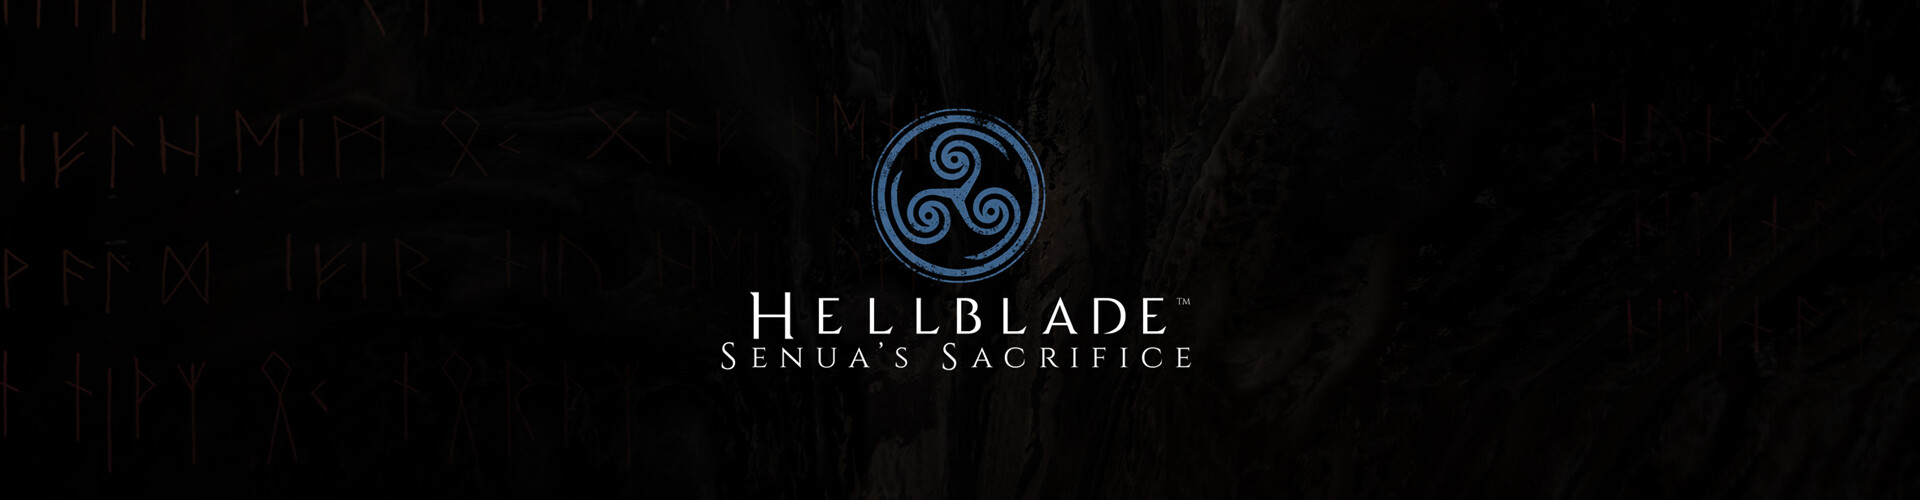 Hellblade 2 trailer edit : r/hellblade